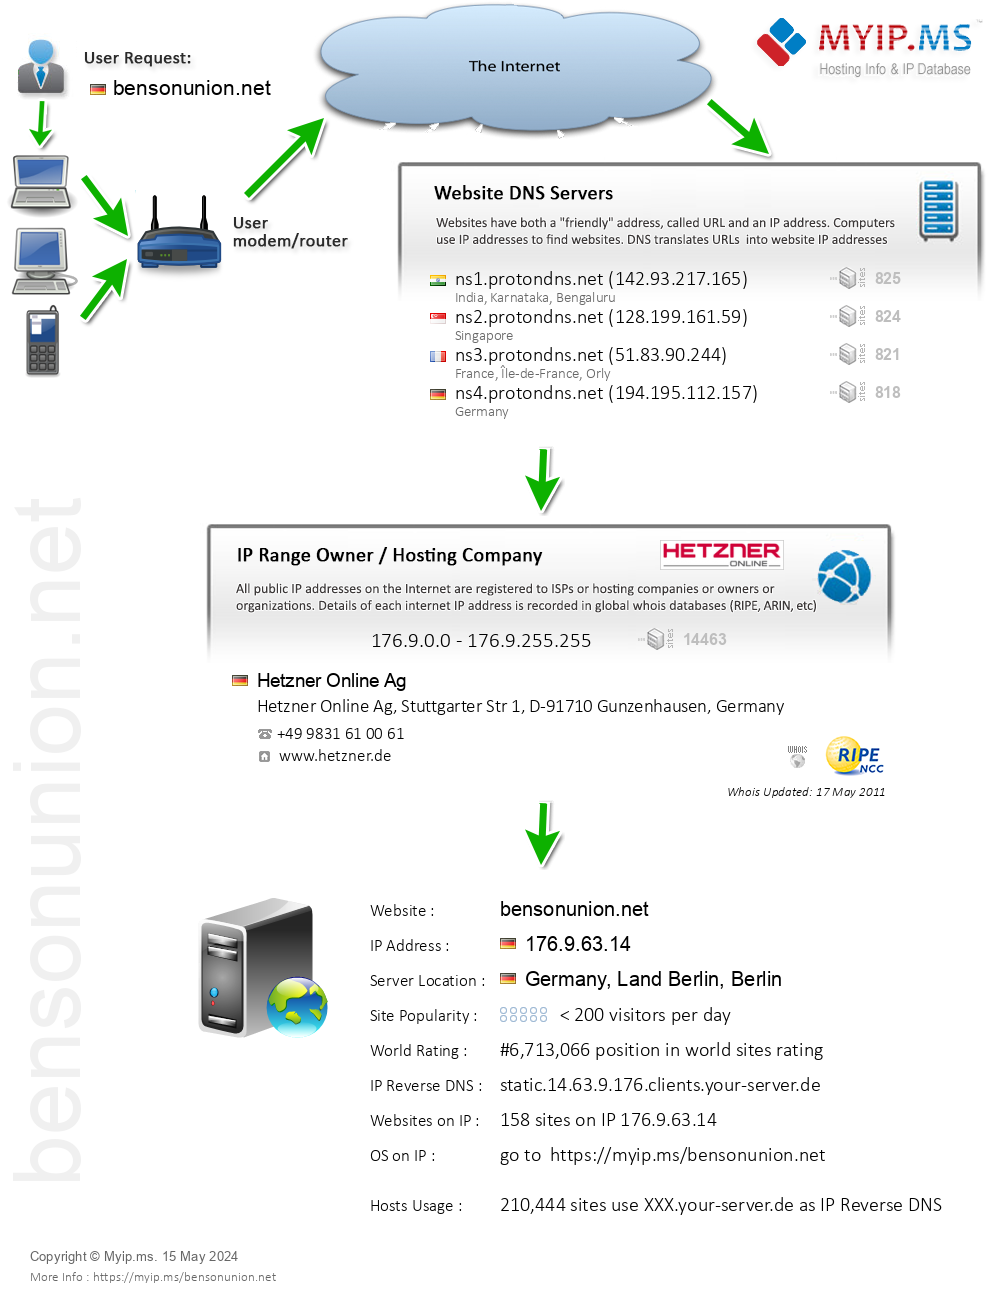 Bensonunion.net - Website Hosting Visual IP Diagram